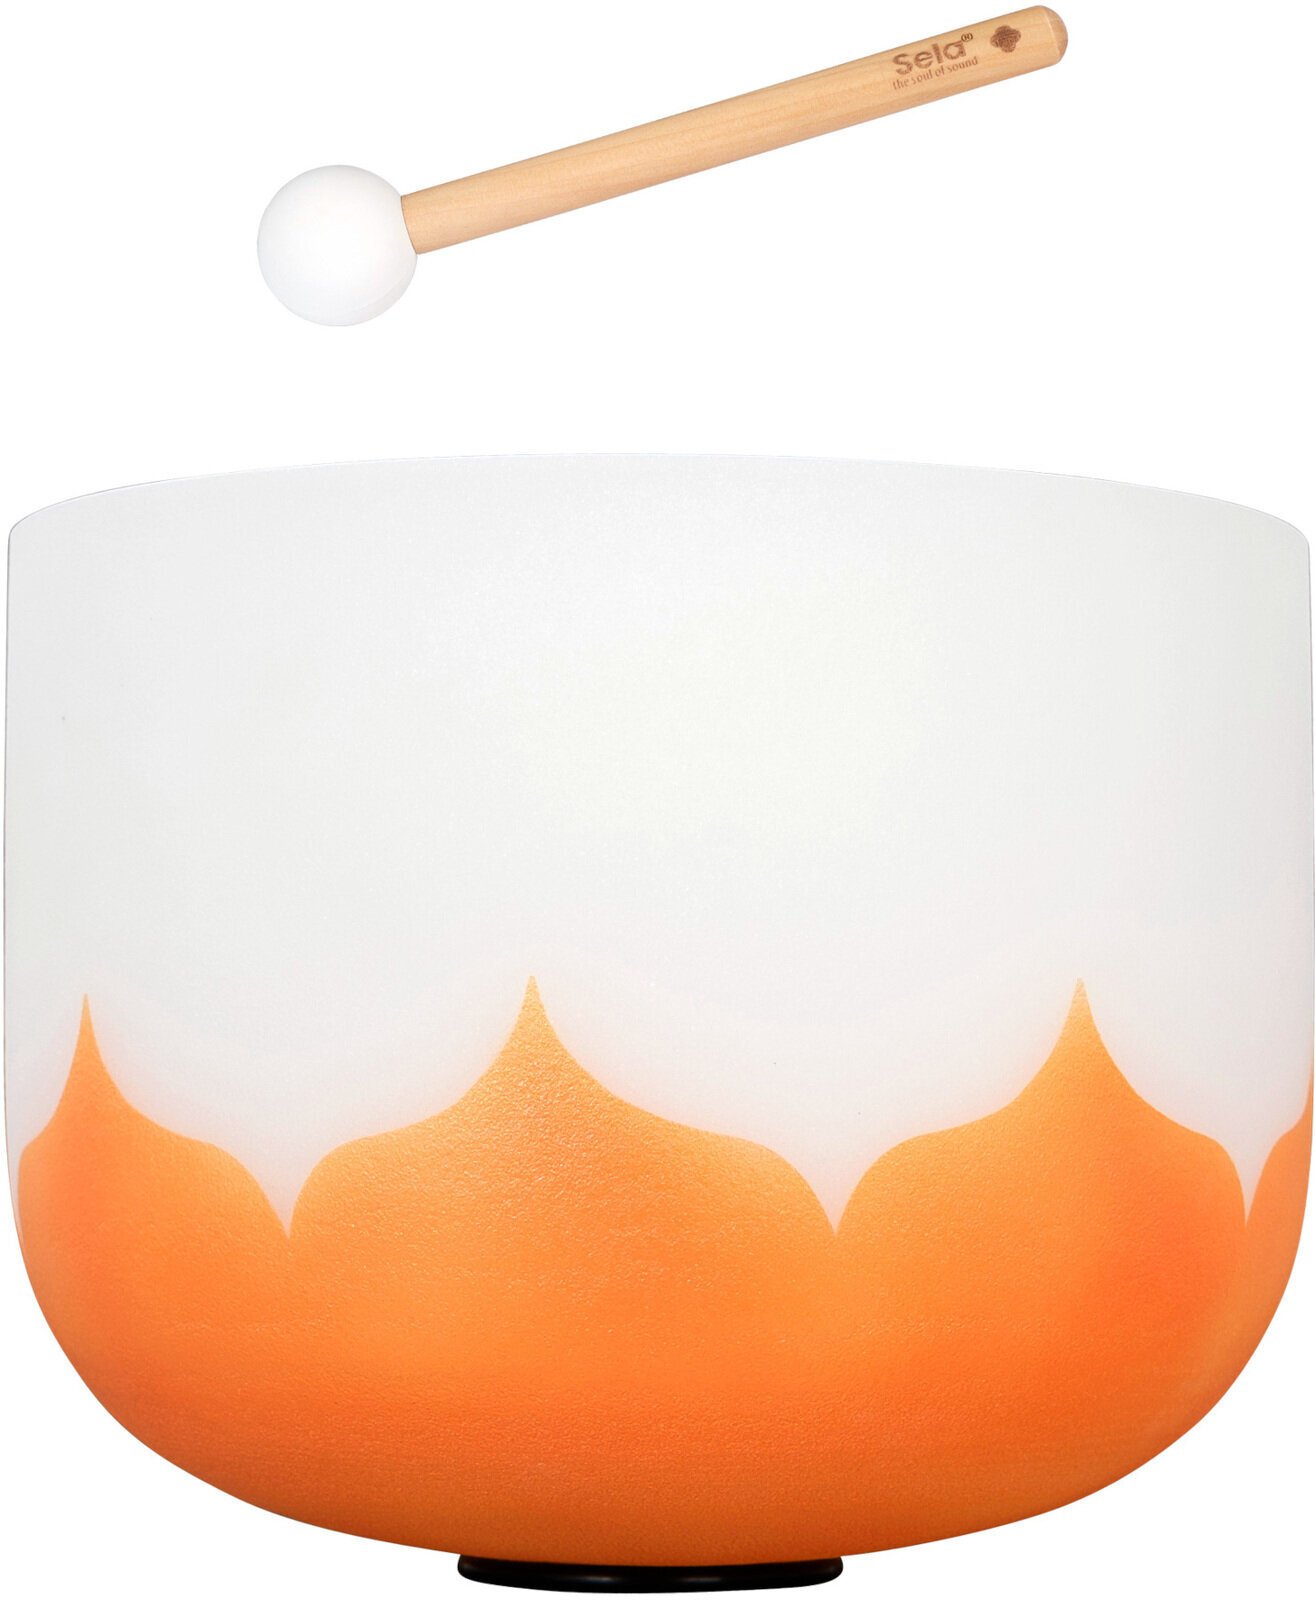 Percussions musicothérapeutiques Sela 10" Crystal Singing Bowl Lotus 432 Hz D - Orange (Sacral Chakra) incl. 1 Wood Mallet